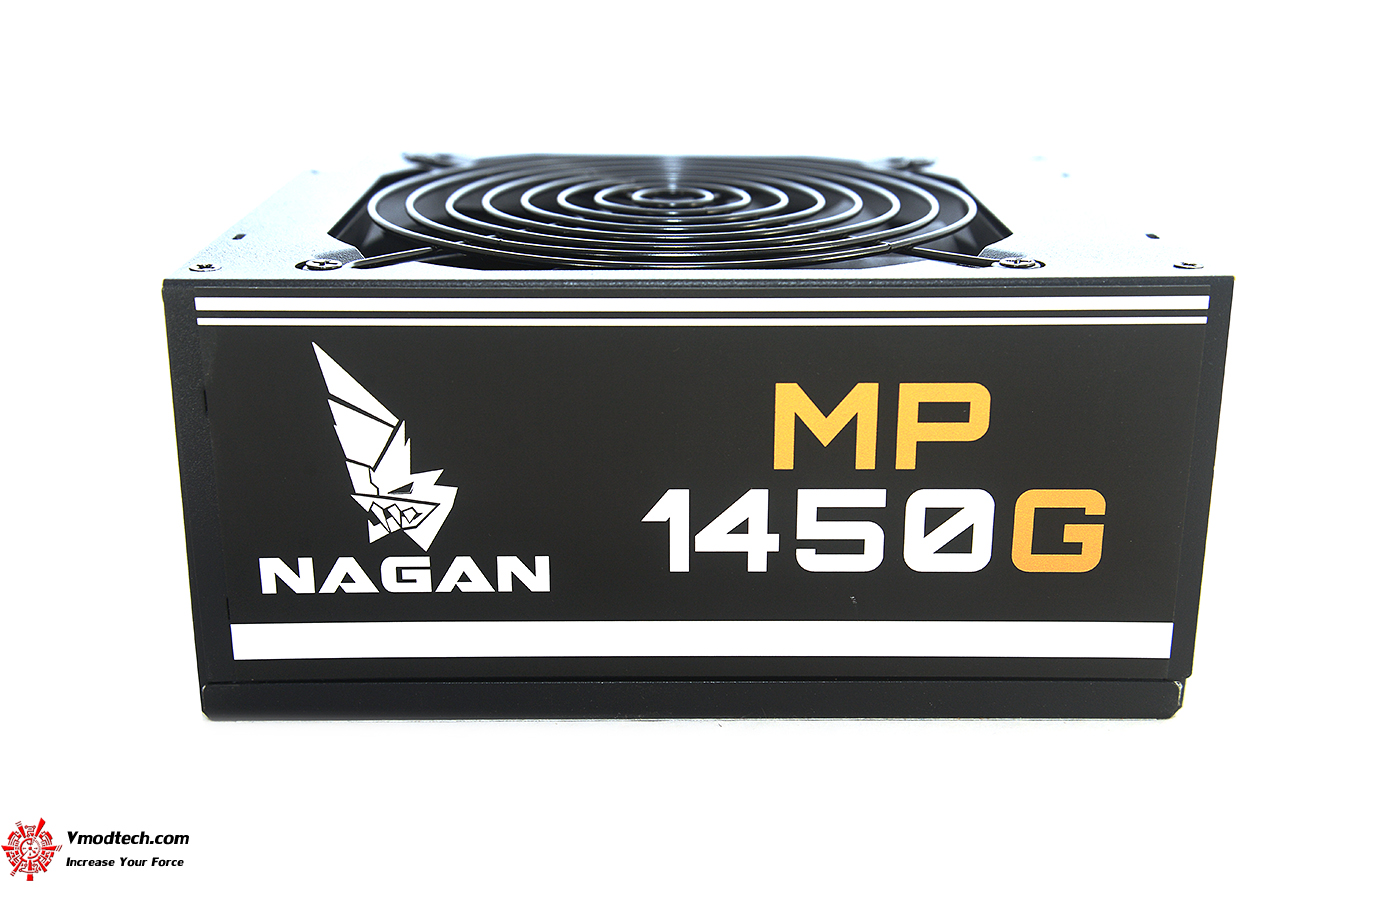 dsc 7219 NAGAN MP 1450G MINING POWER SUPPLY REVIEW